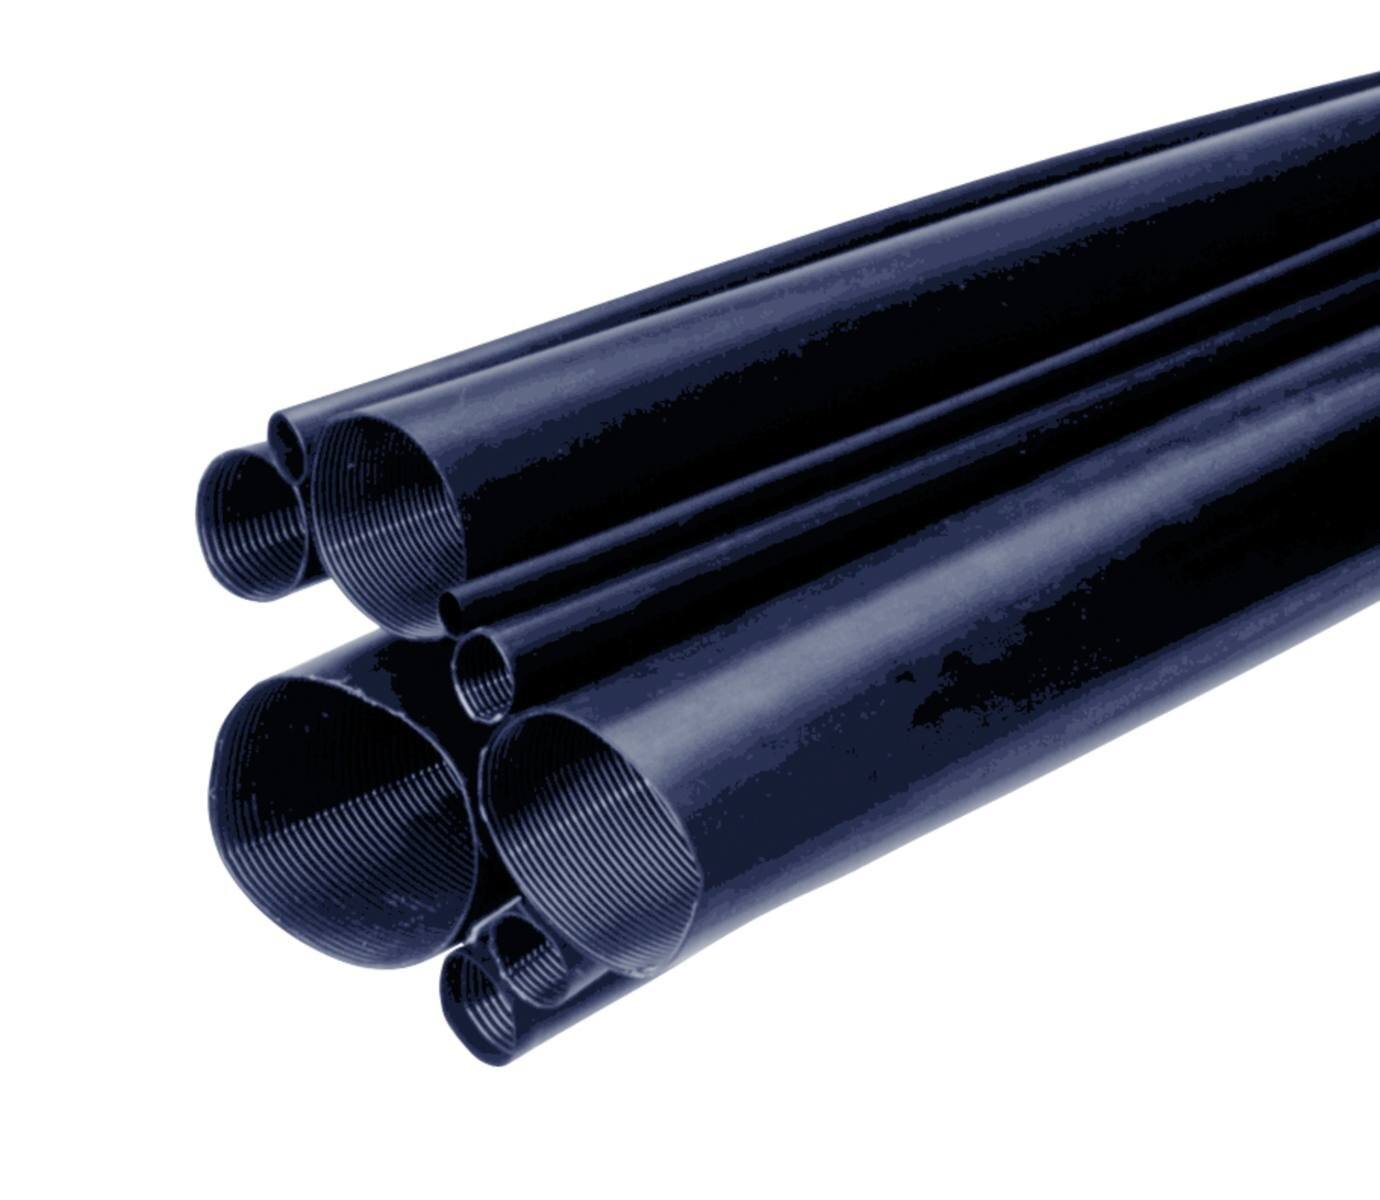 3M MDT-A Medium-wall heat-shrink tubing with adhesive, black, 27/8 mm, 1 m